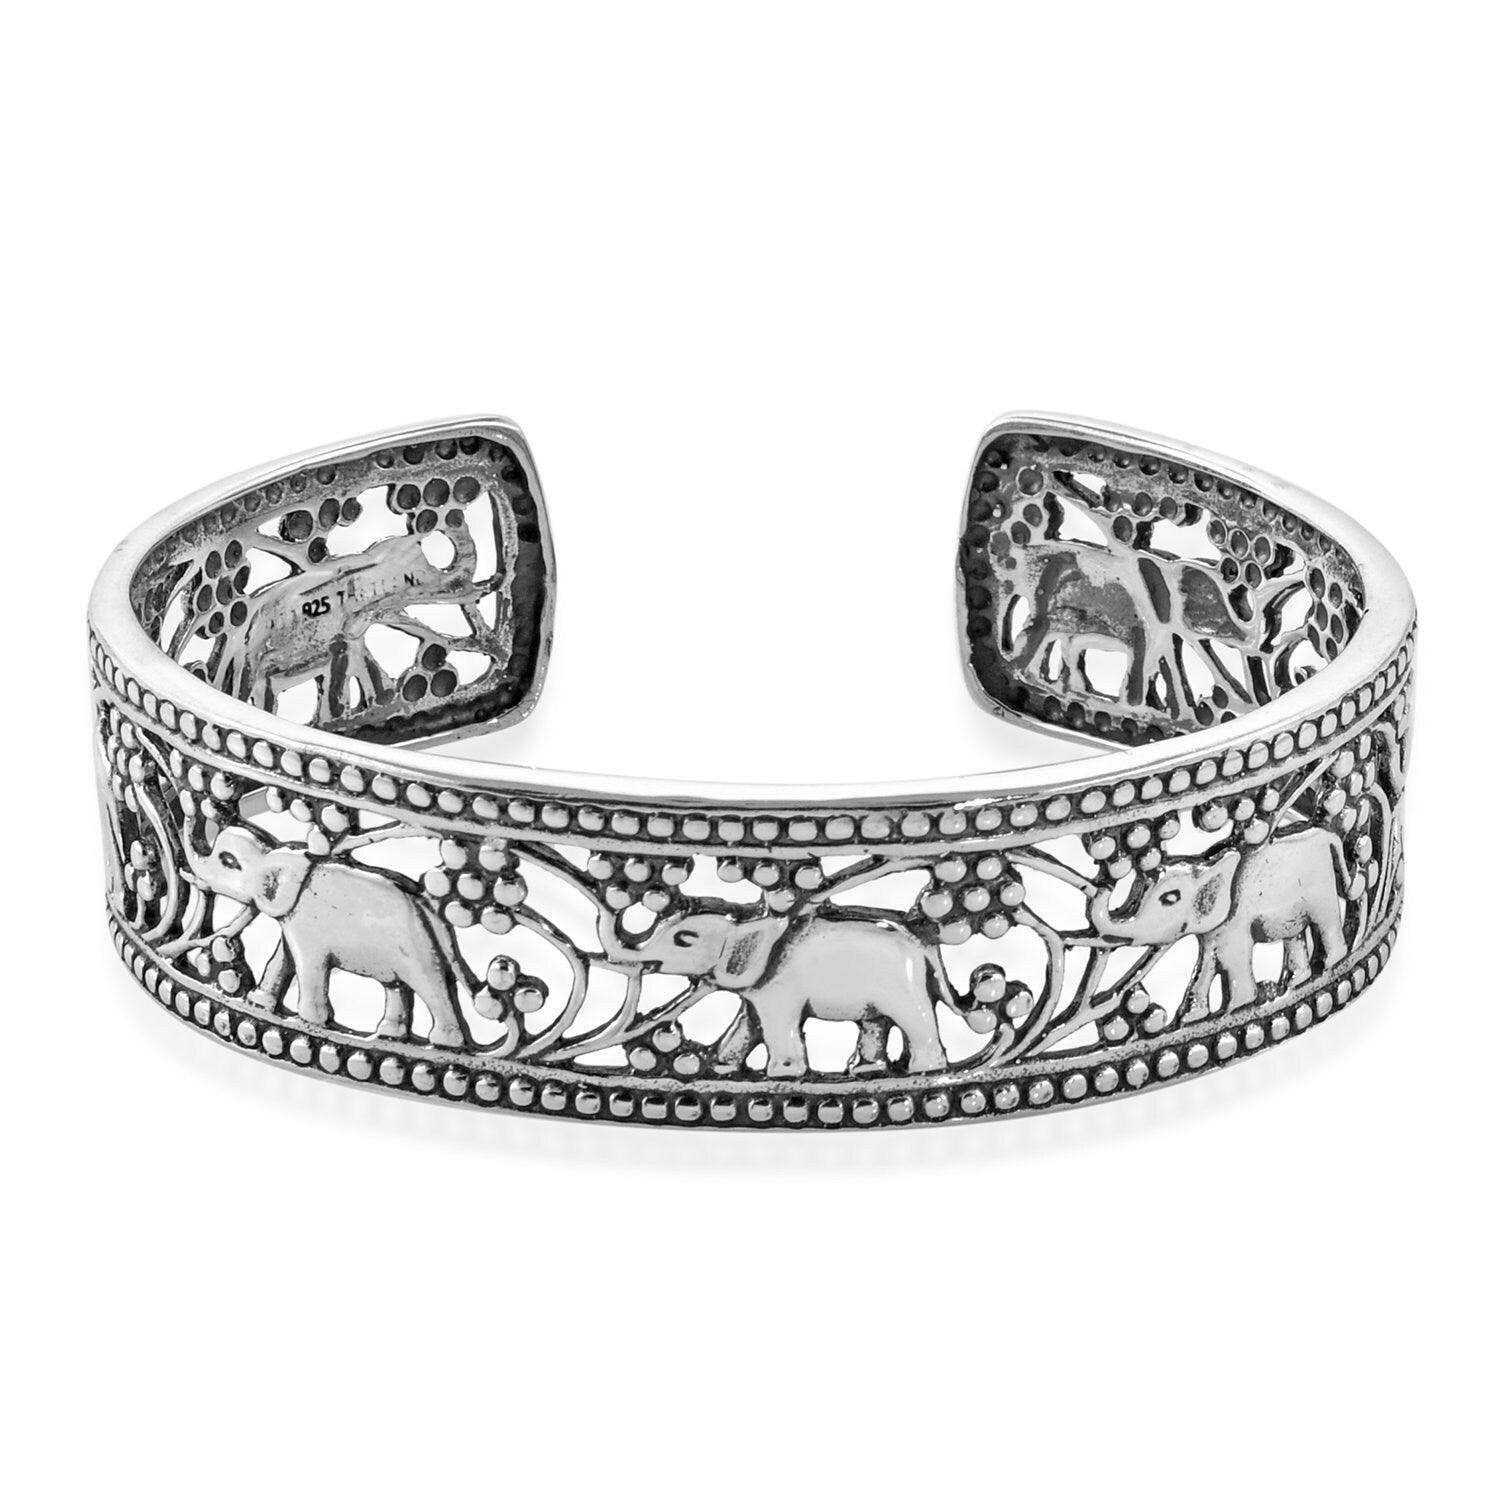 Wide ELEPHANT Cuff BANGLE Bracelet in SOLID 925 Sterling Silver 32 Grams - Inspiring Jewellery